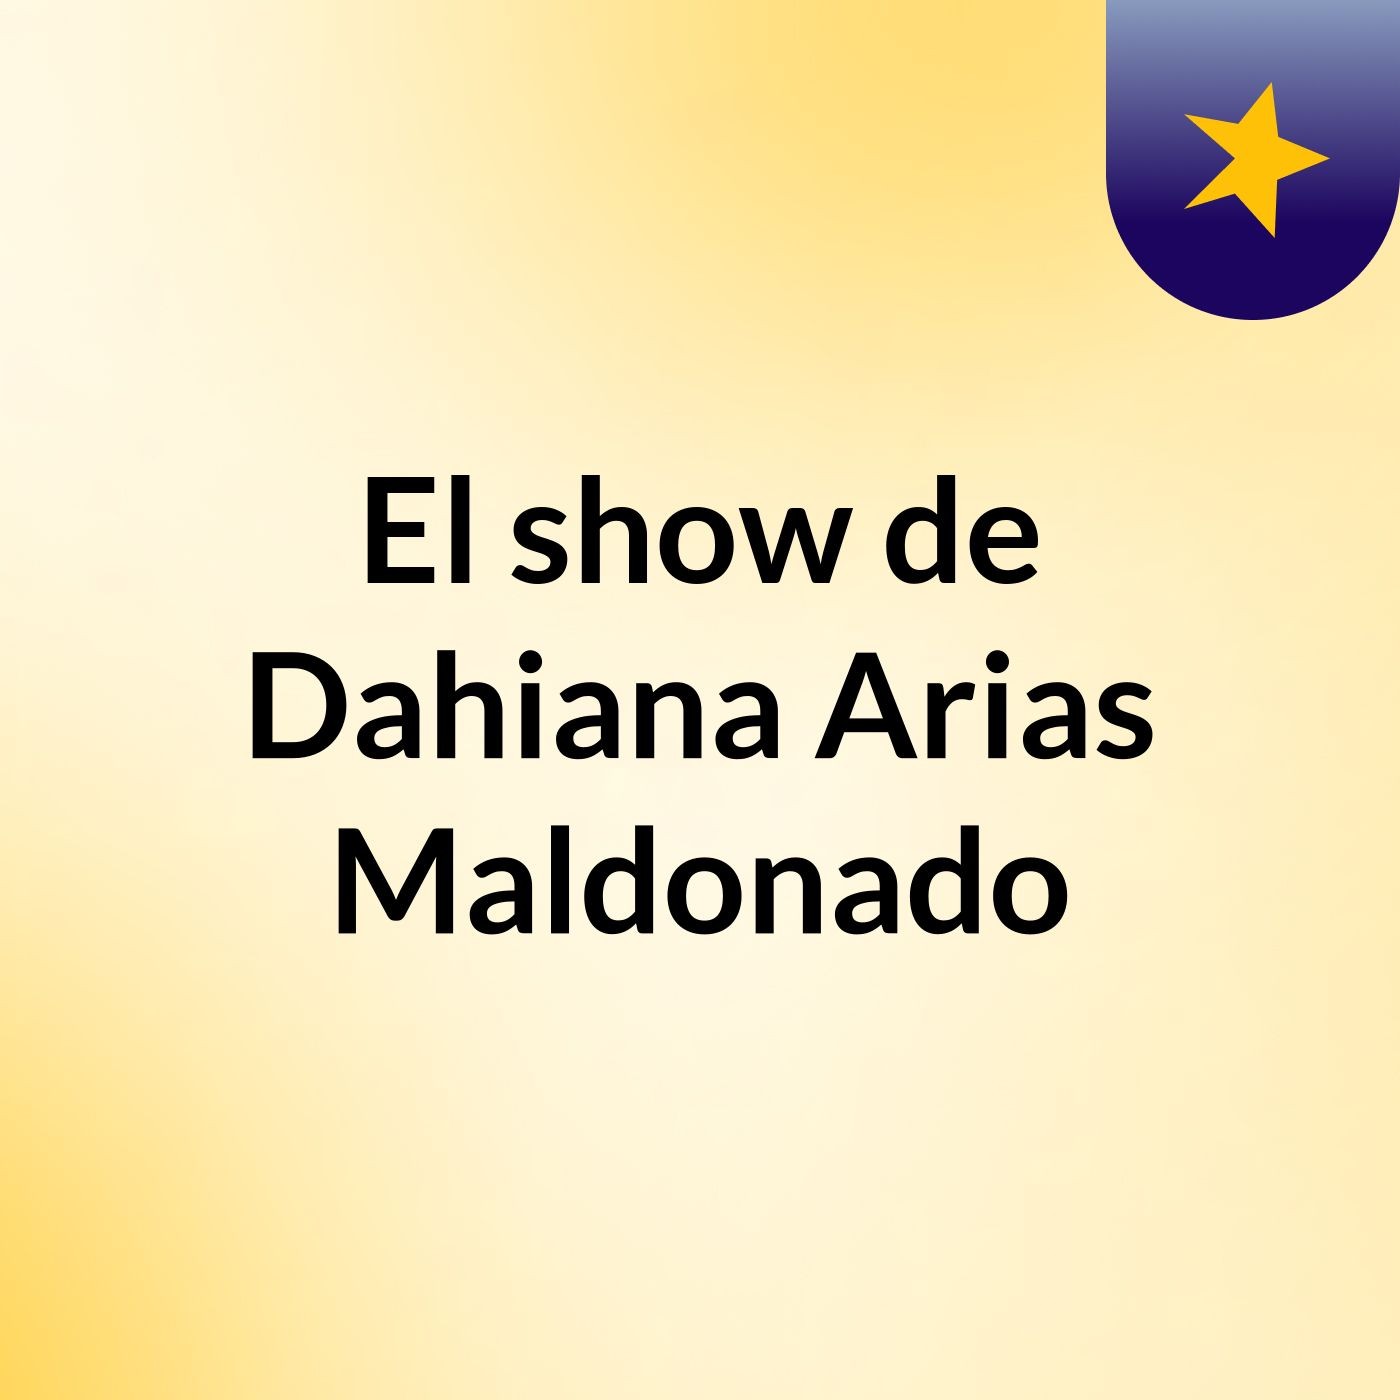 El show de Dahiana Arias Maldonado